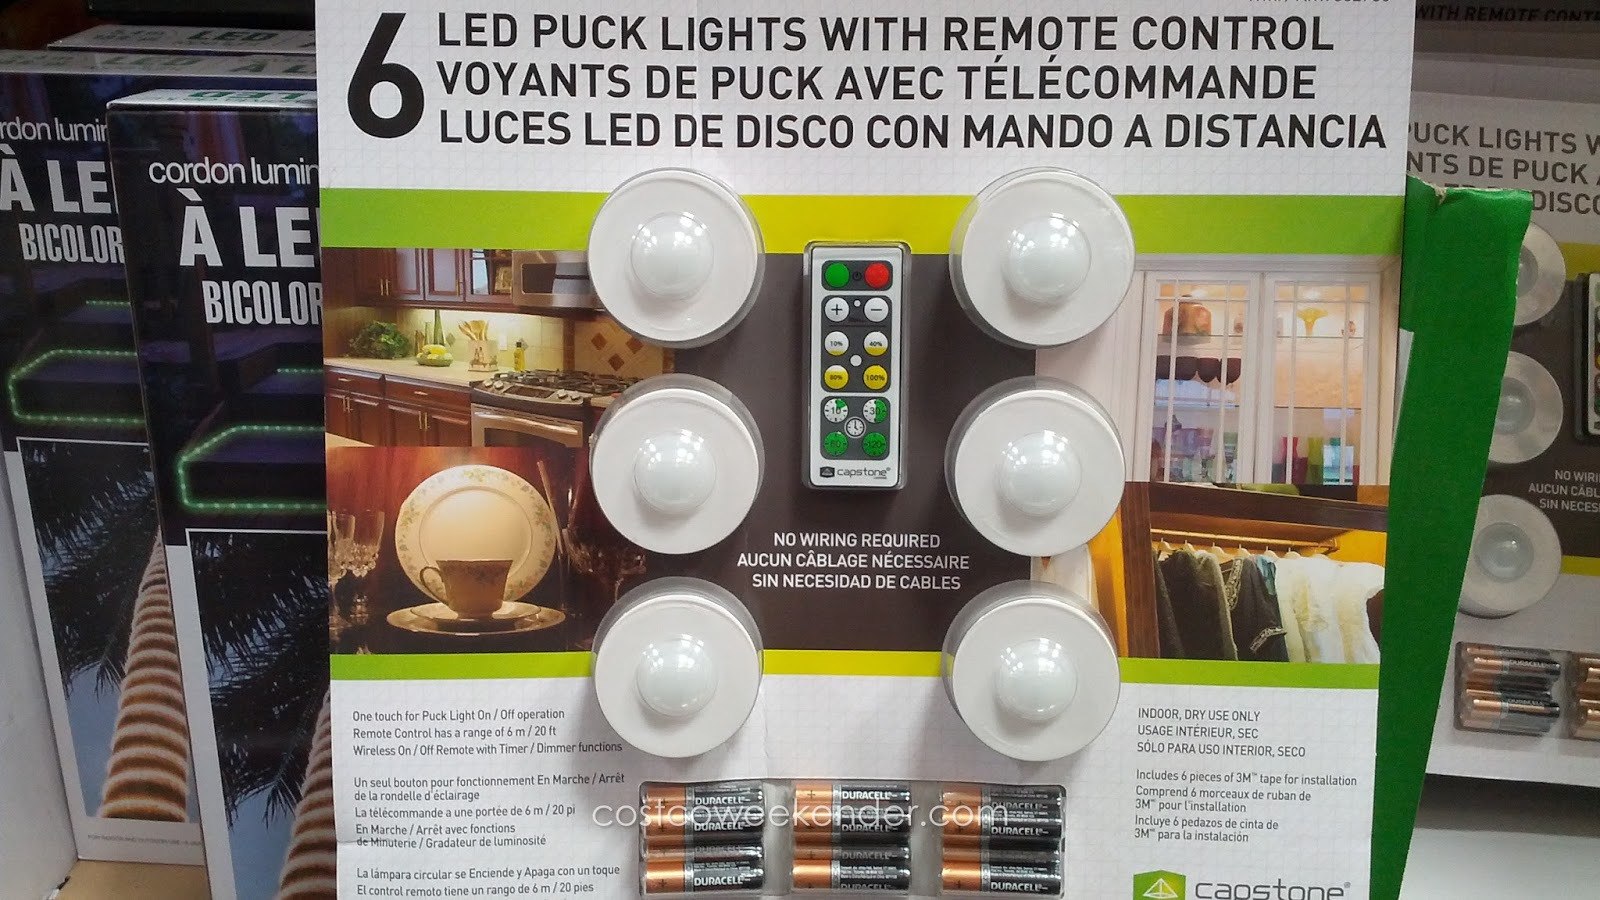 capstone-led-puck-lights-6-pack-costco.jpg